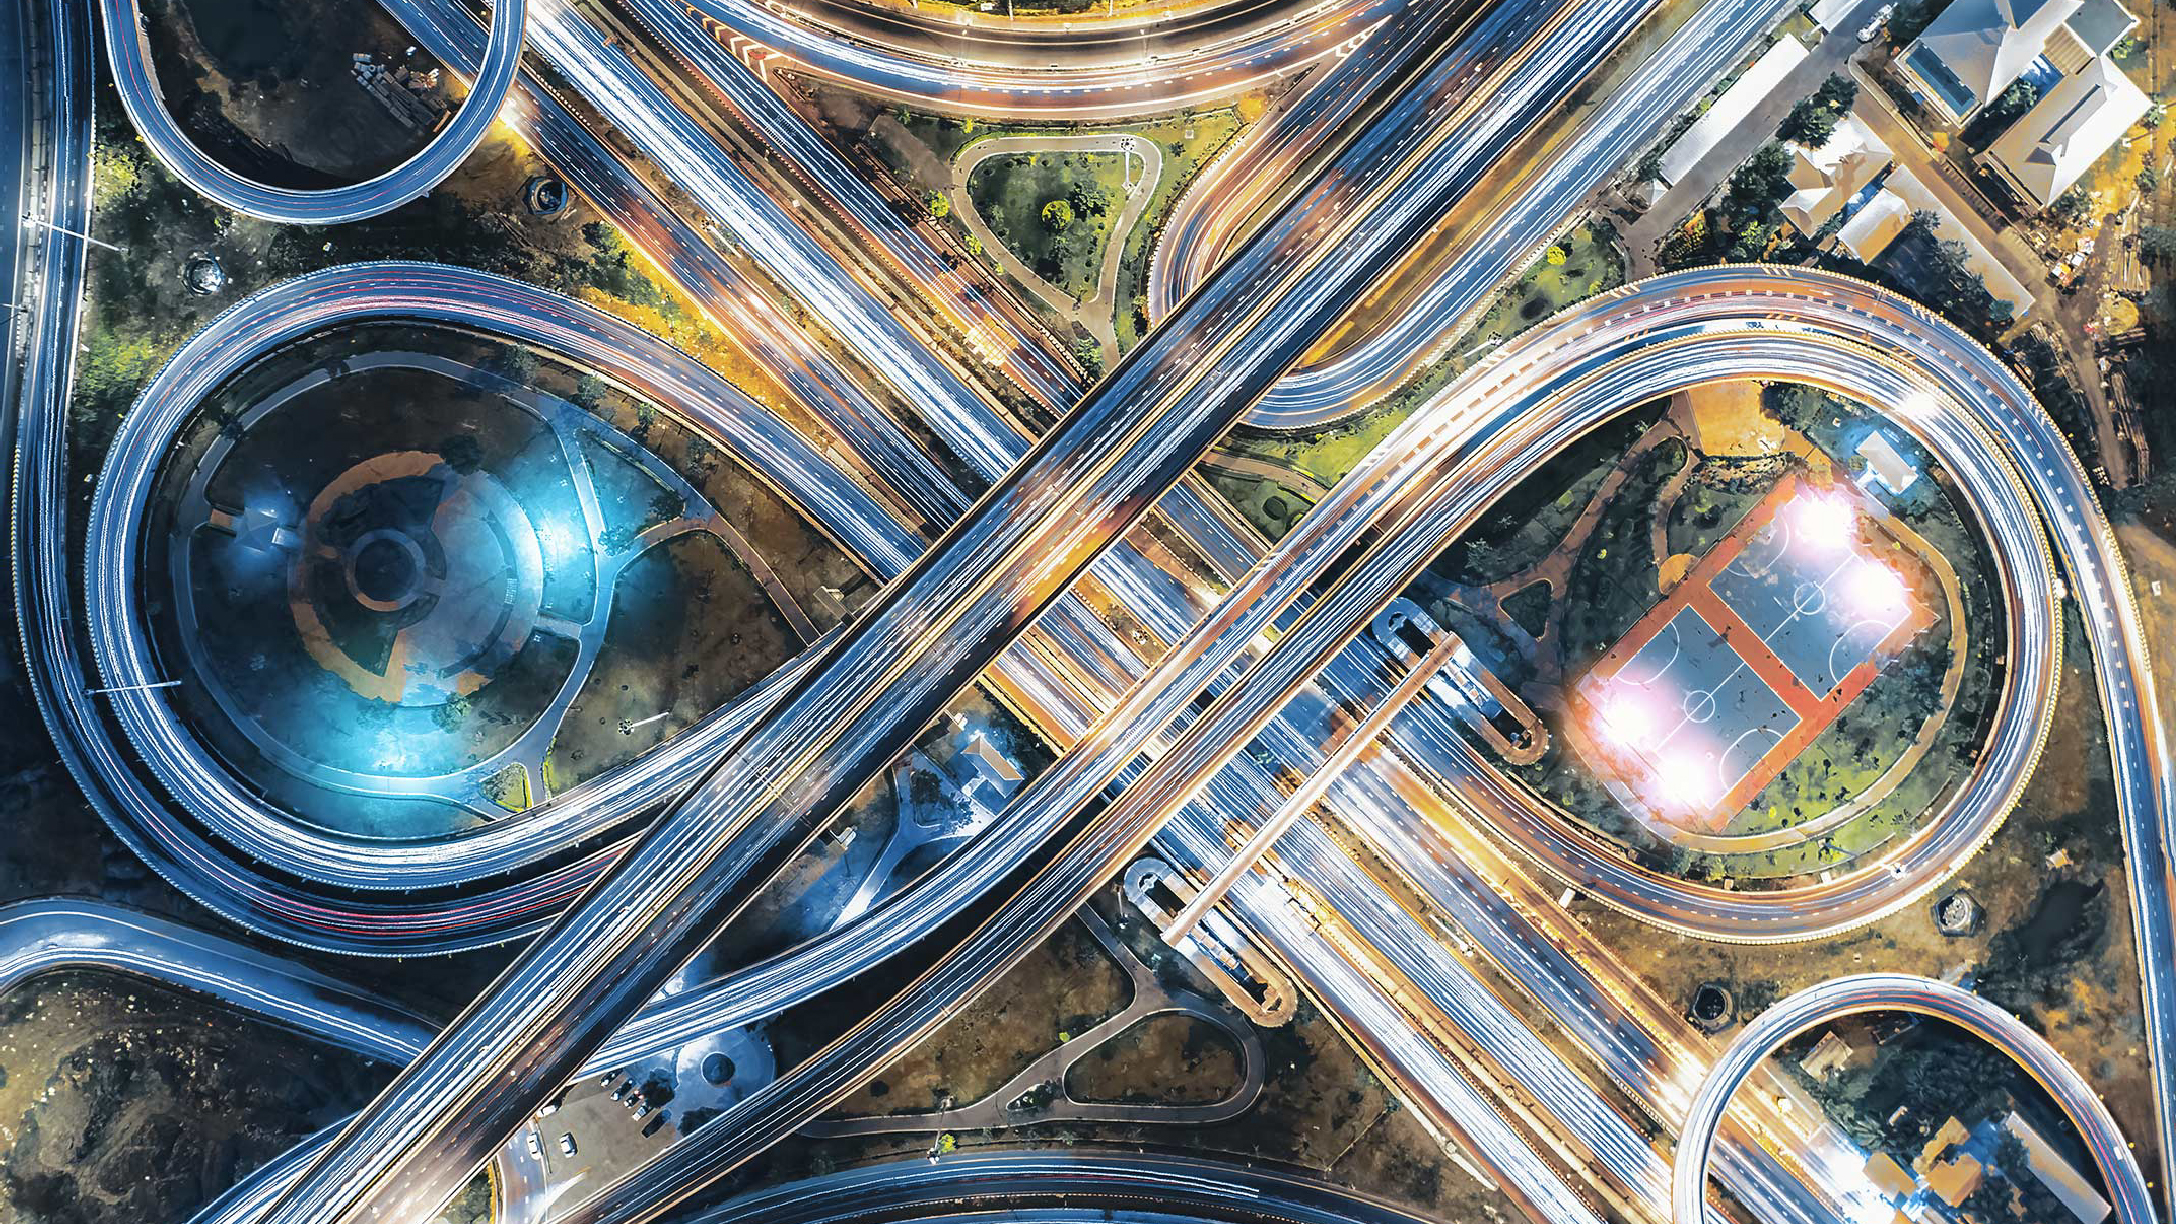 Autostrada nordamericana fotografata dall'alto